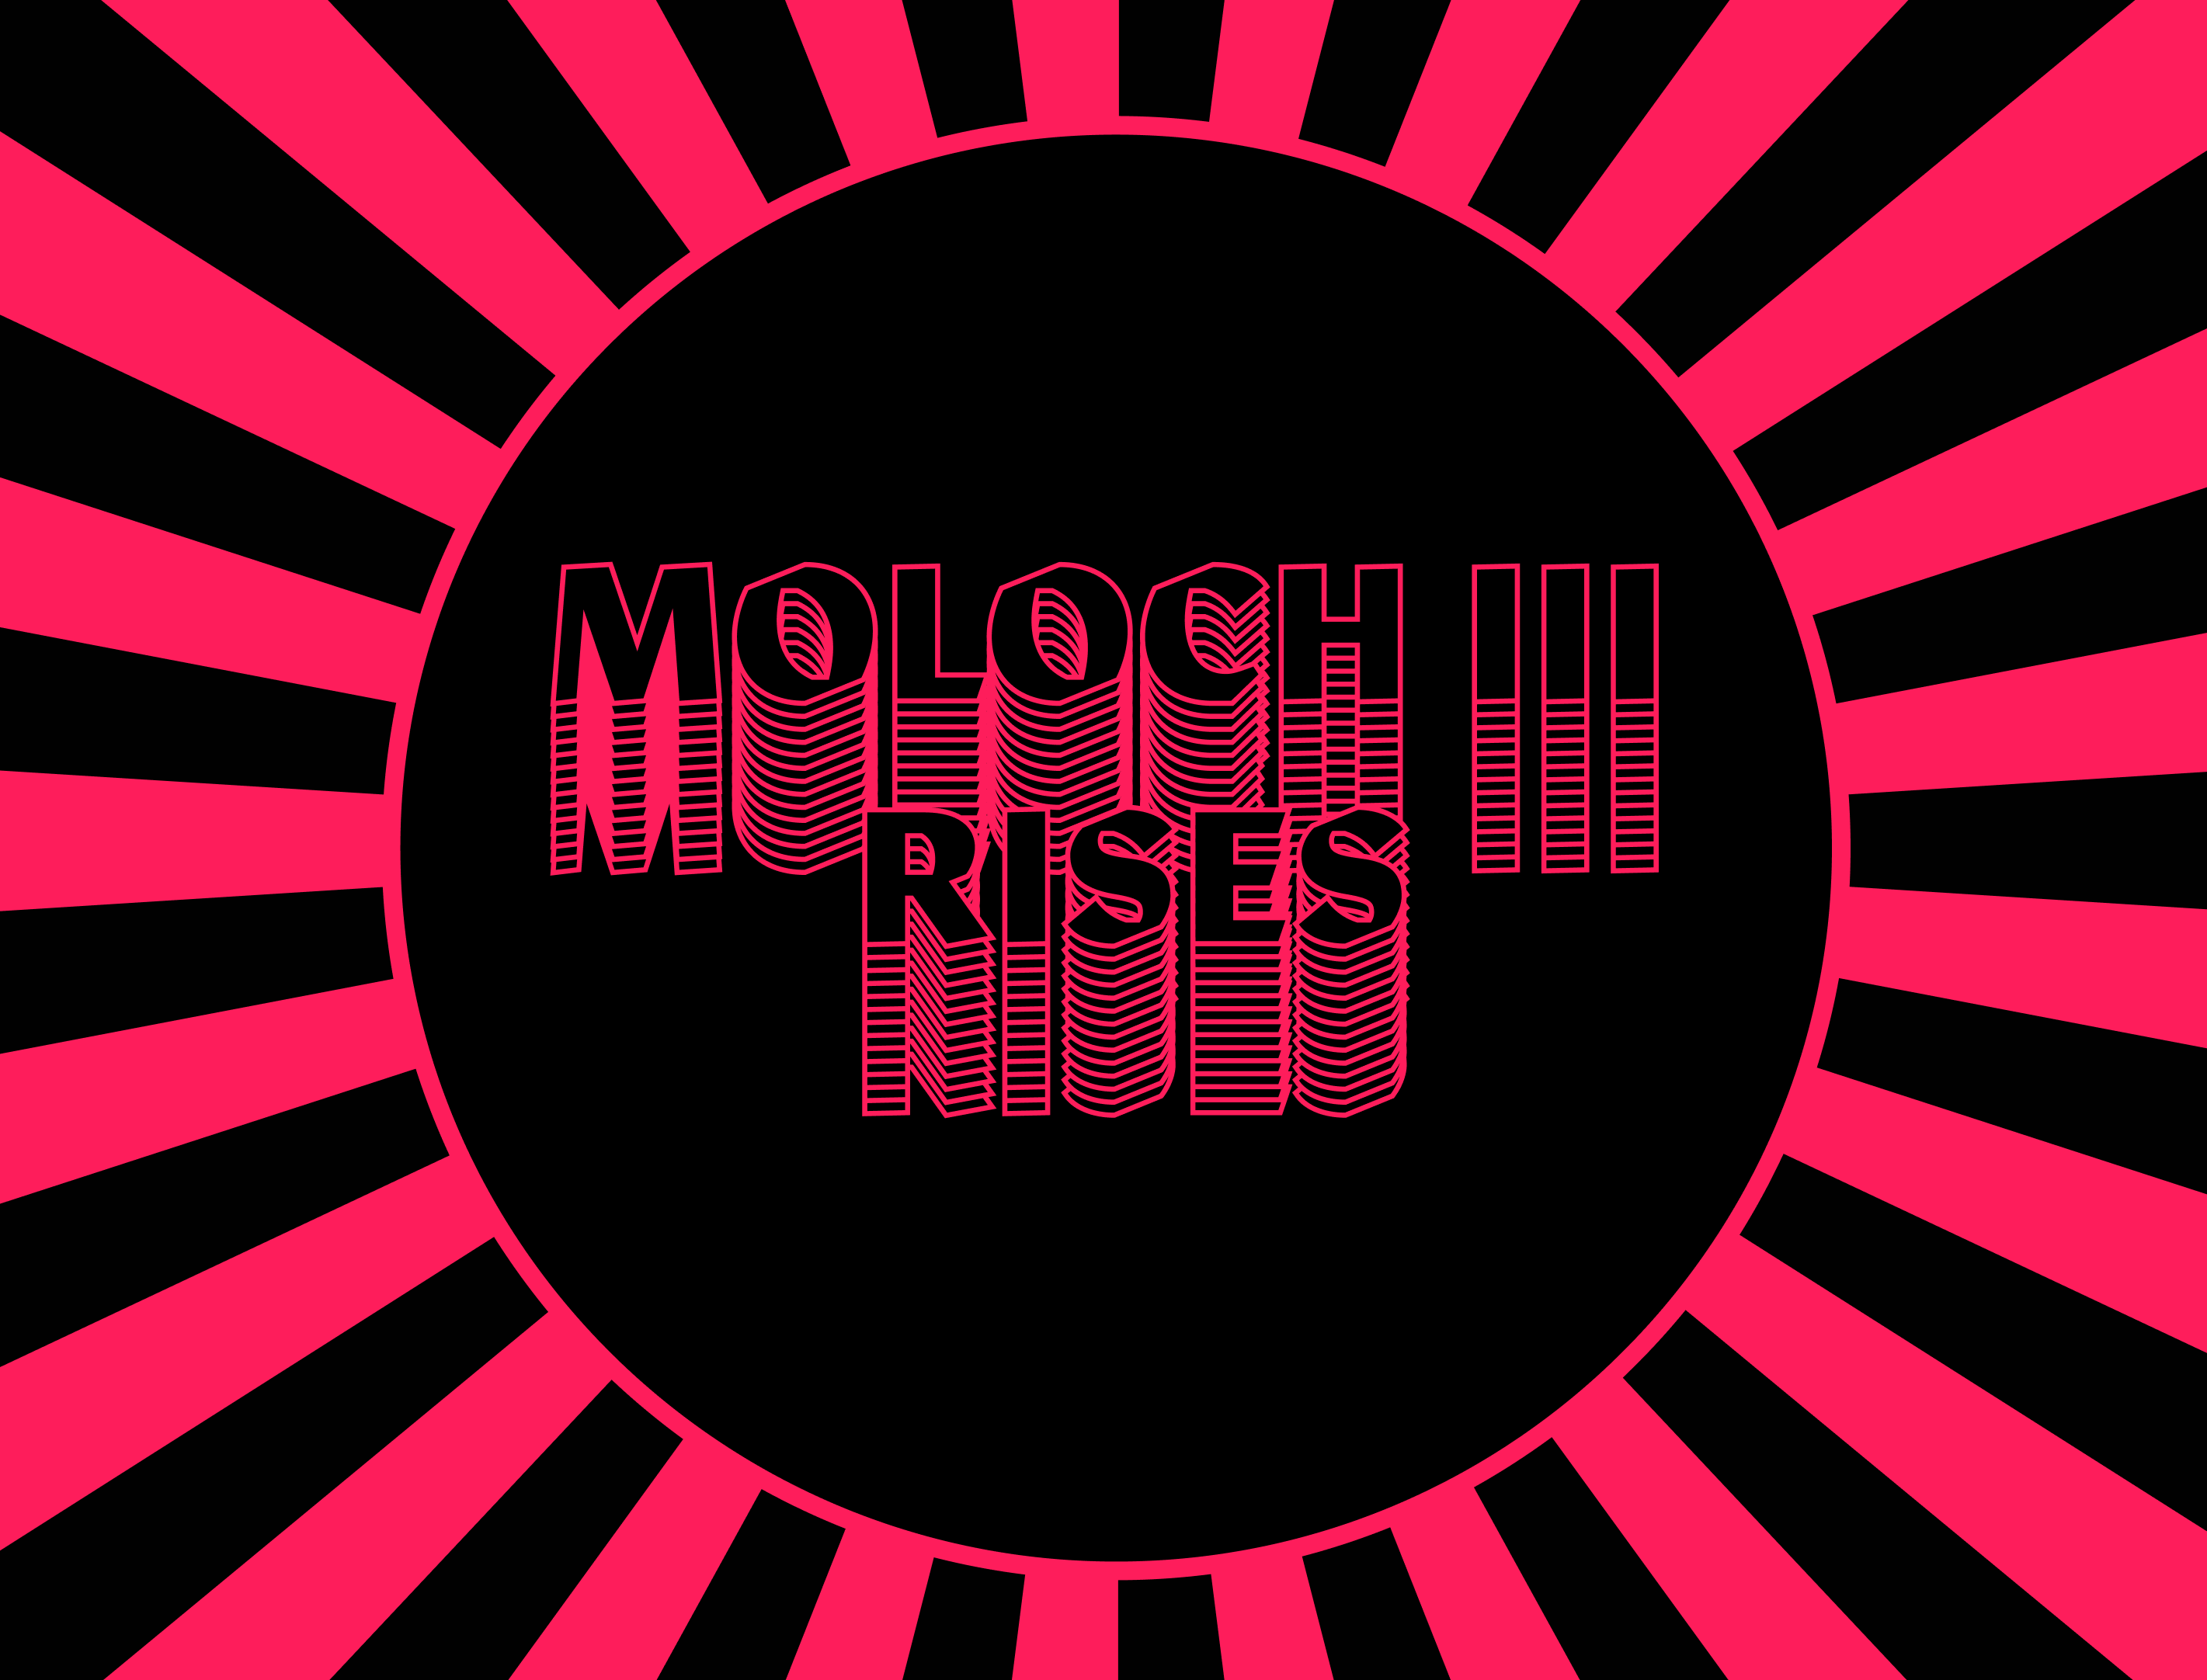 Moloch v3 and DAOhaus v3 rise together